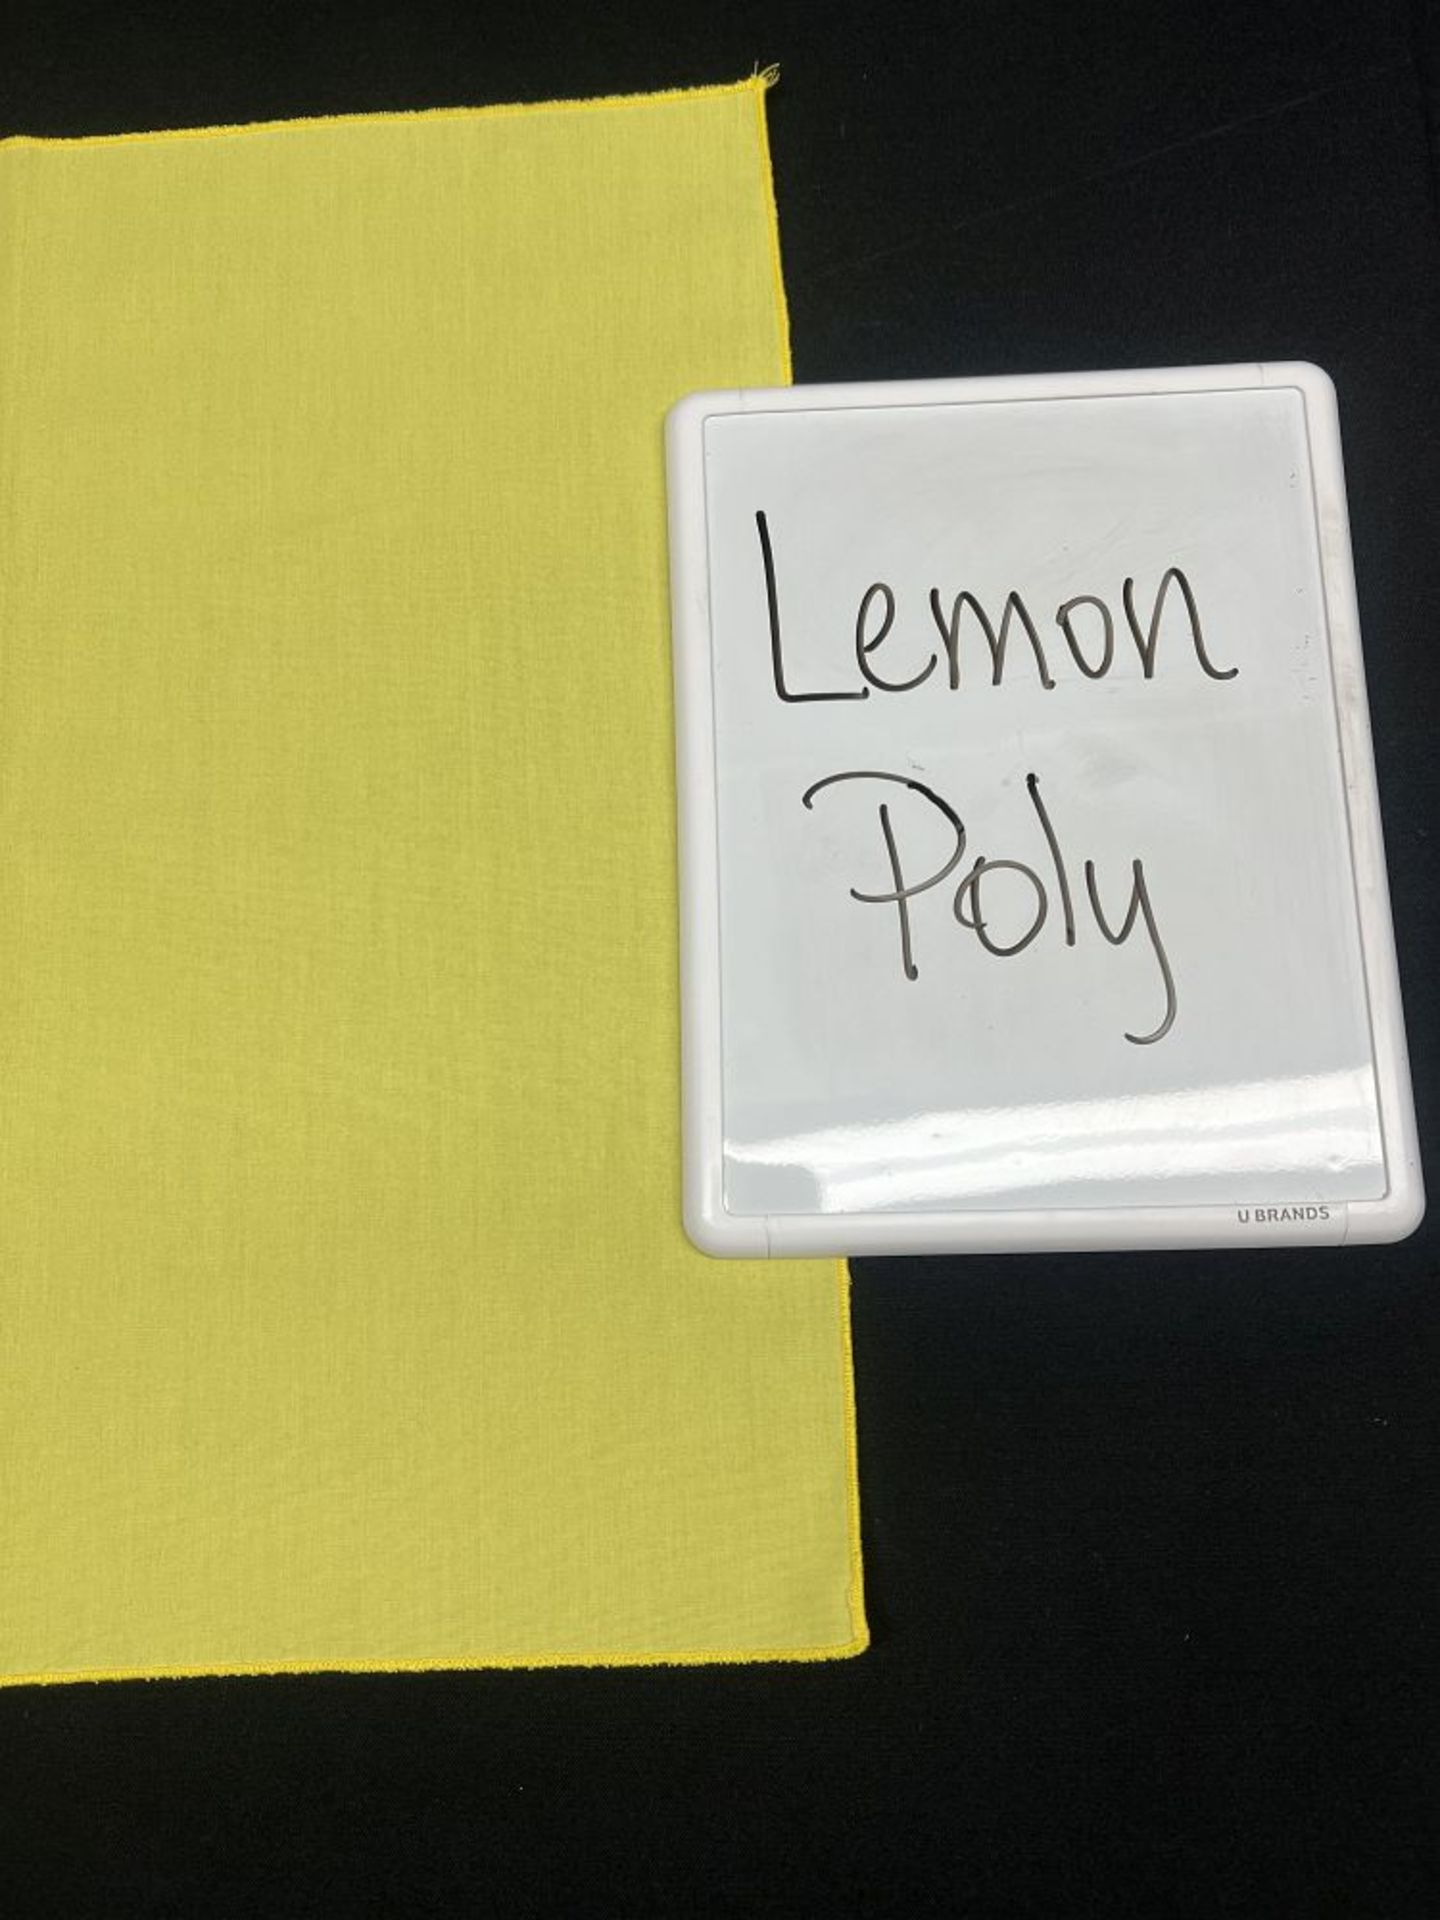 Lemon 108" Round Poly Tablecloth